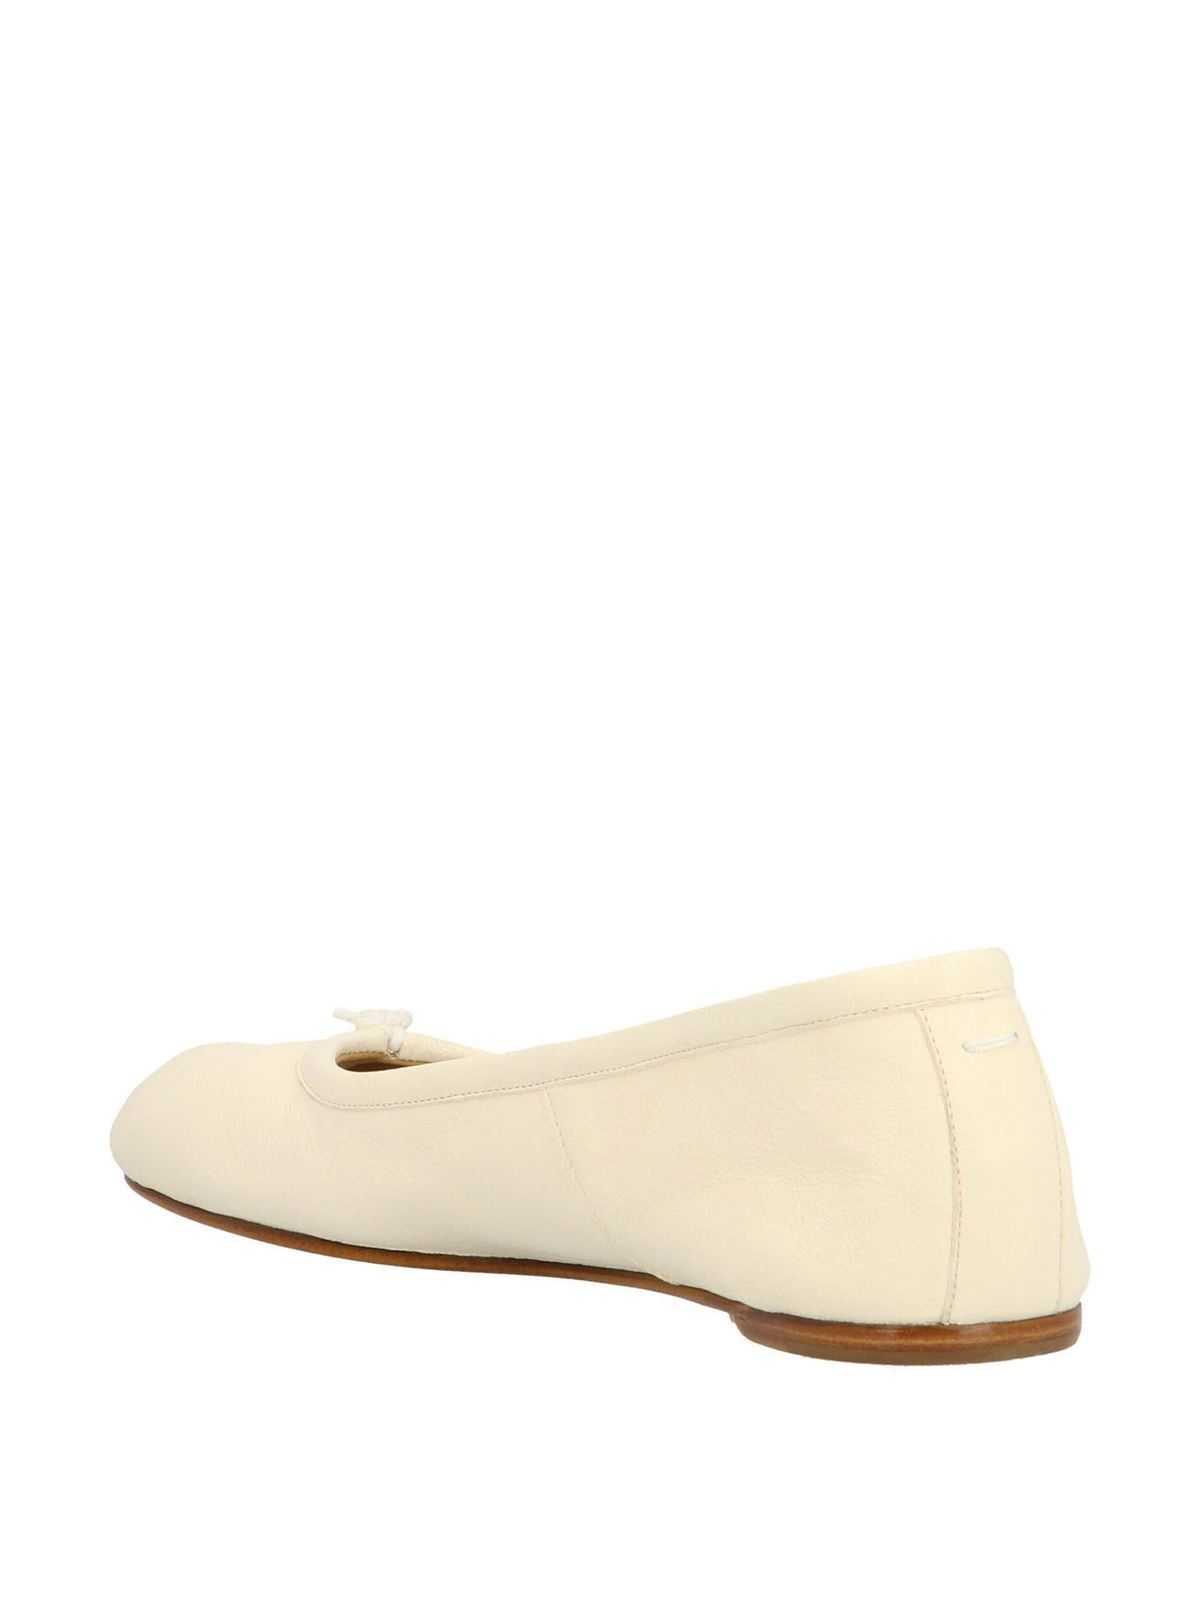 Flat shoes Maison Margiela - Tabi ballet flats in white ...